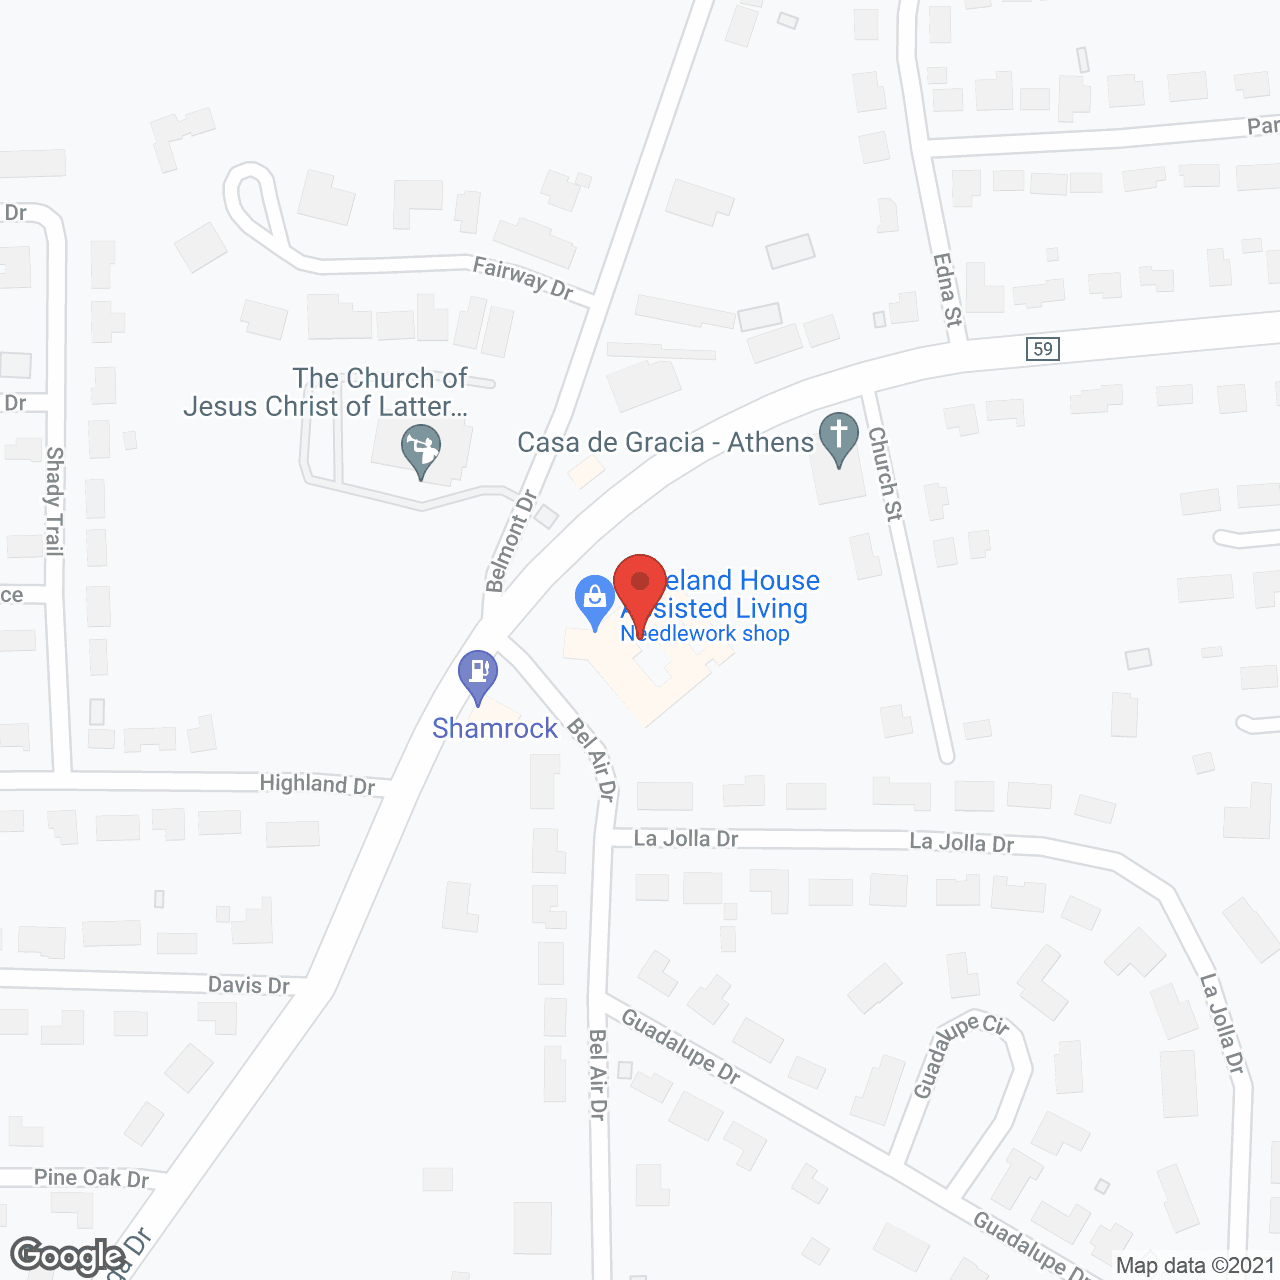 Lakeland House in google map